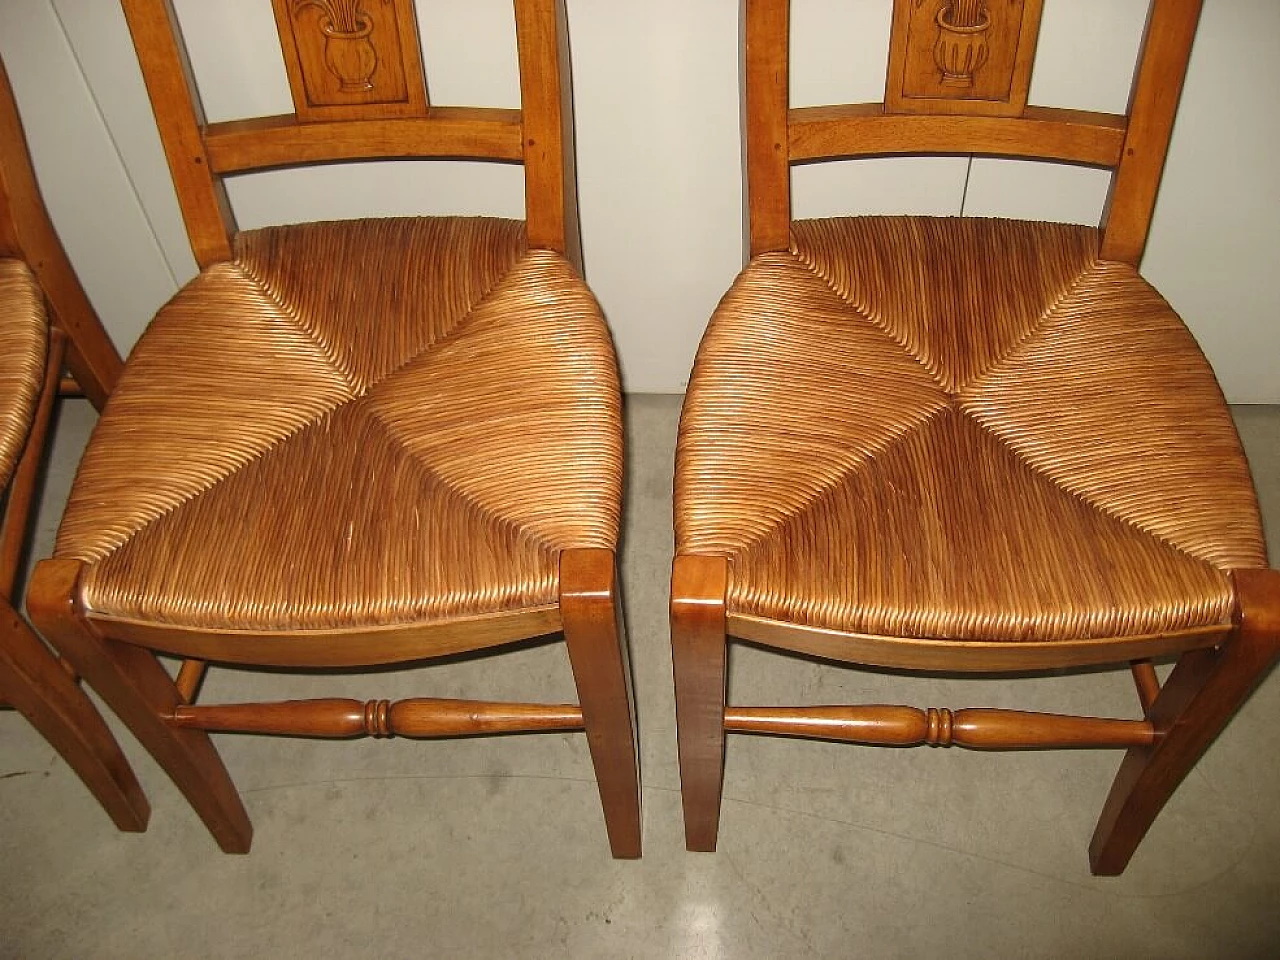 4 Honey walnut chairs with straw seats, 2000s 4